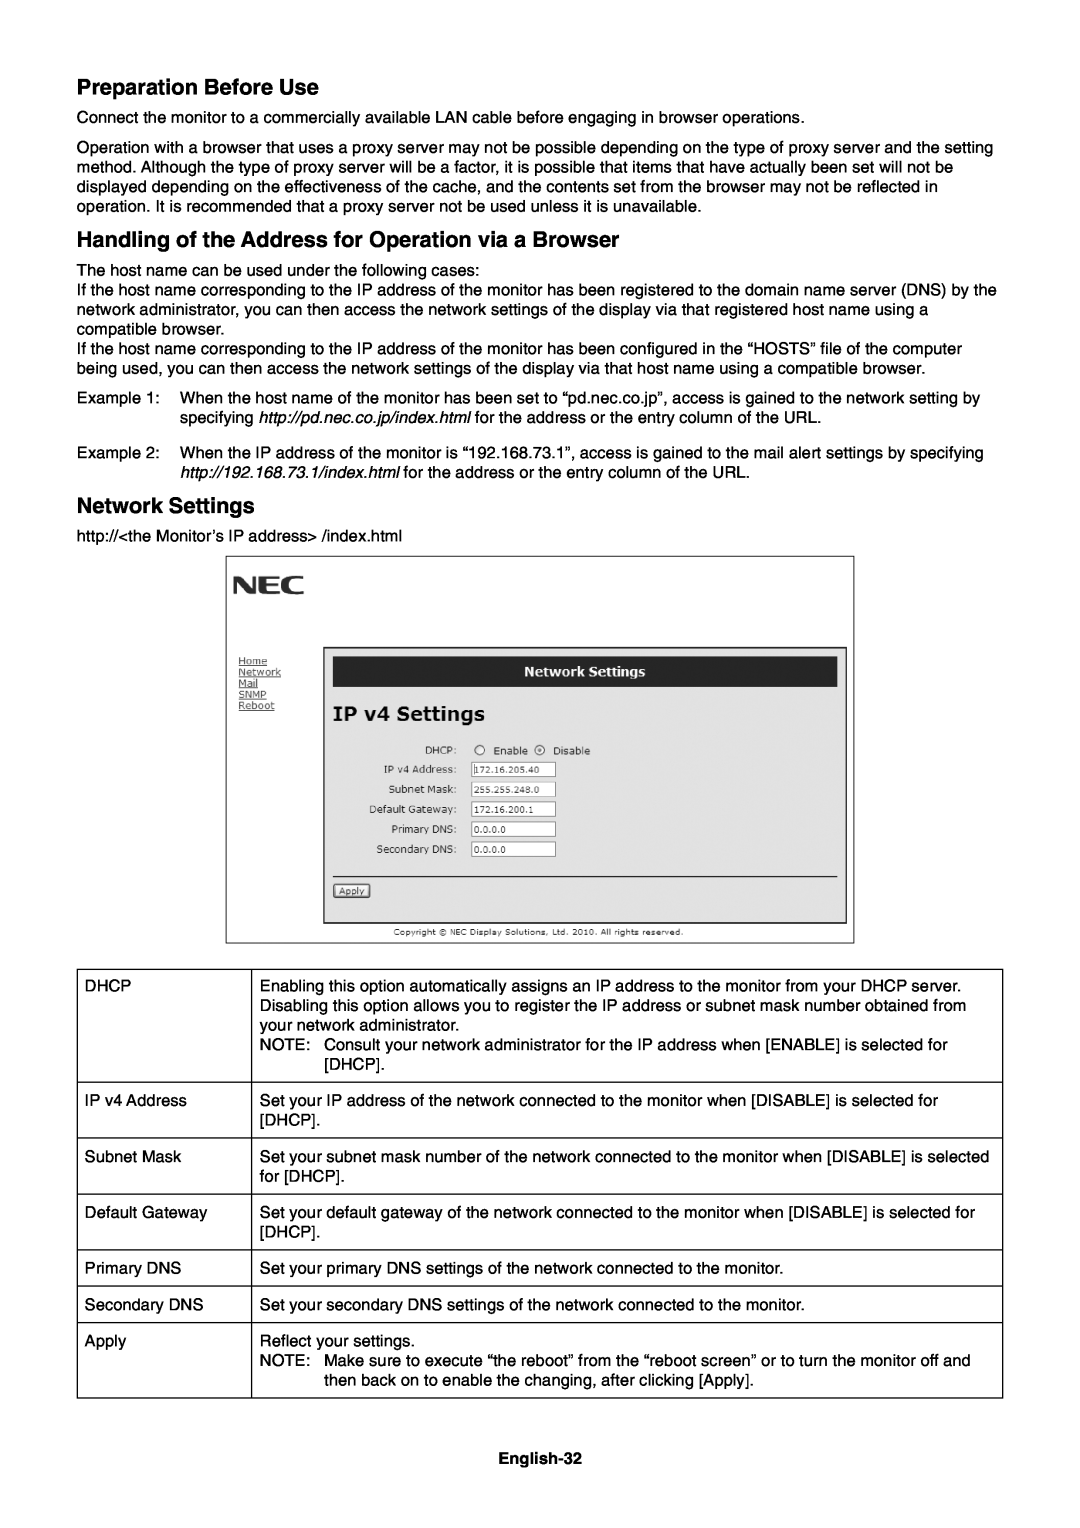 NEC MULTISYNC X462HB user manual Preparation Before Use, Network Settings, English-32 